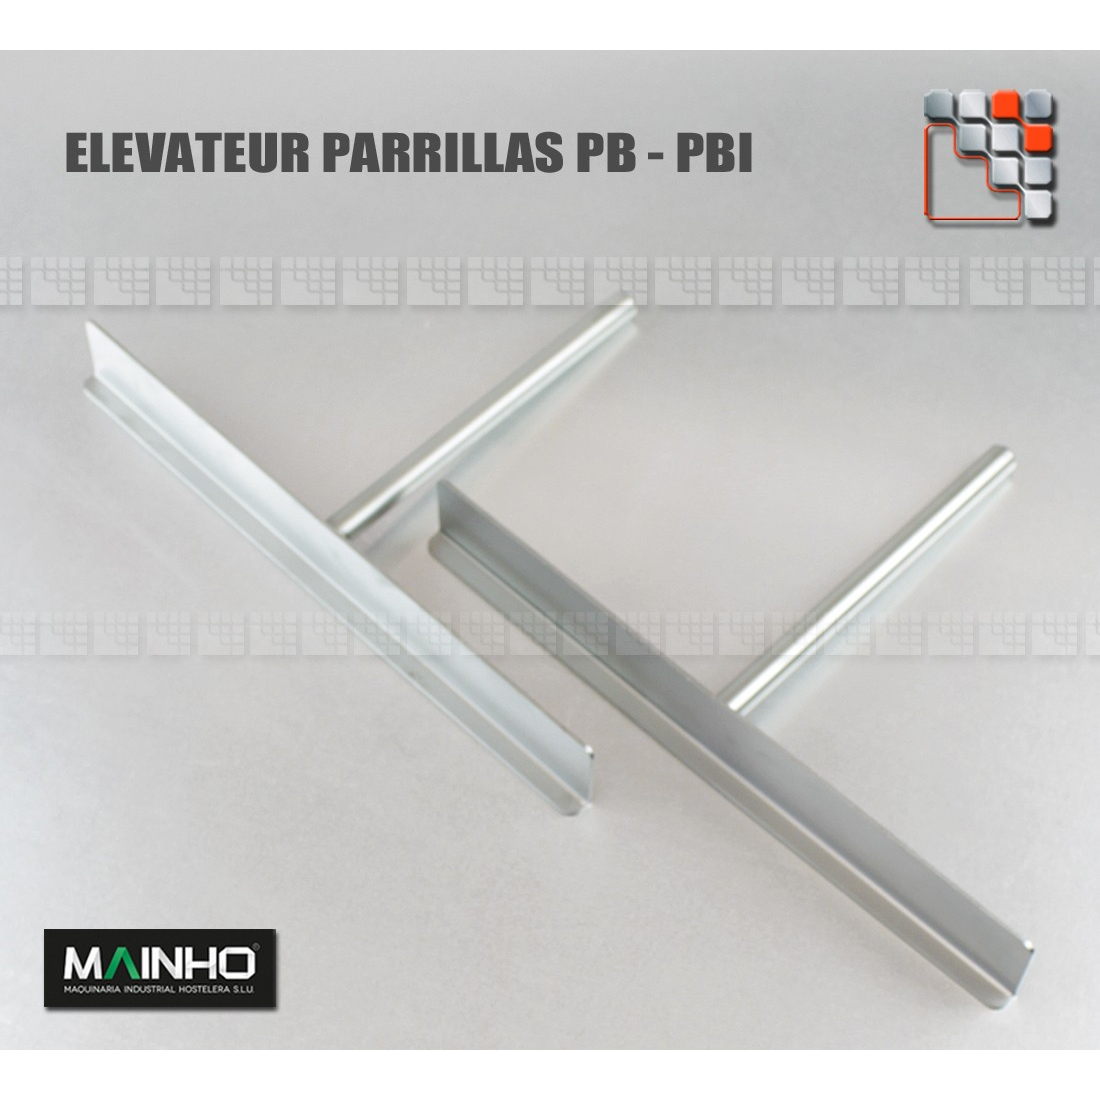 Set of PB Elevator Grid Parts - PBI MAINHO M36-Z PBI 60 MAINHO SAV - Accessoires MAINHO Spare Parts